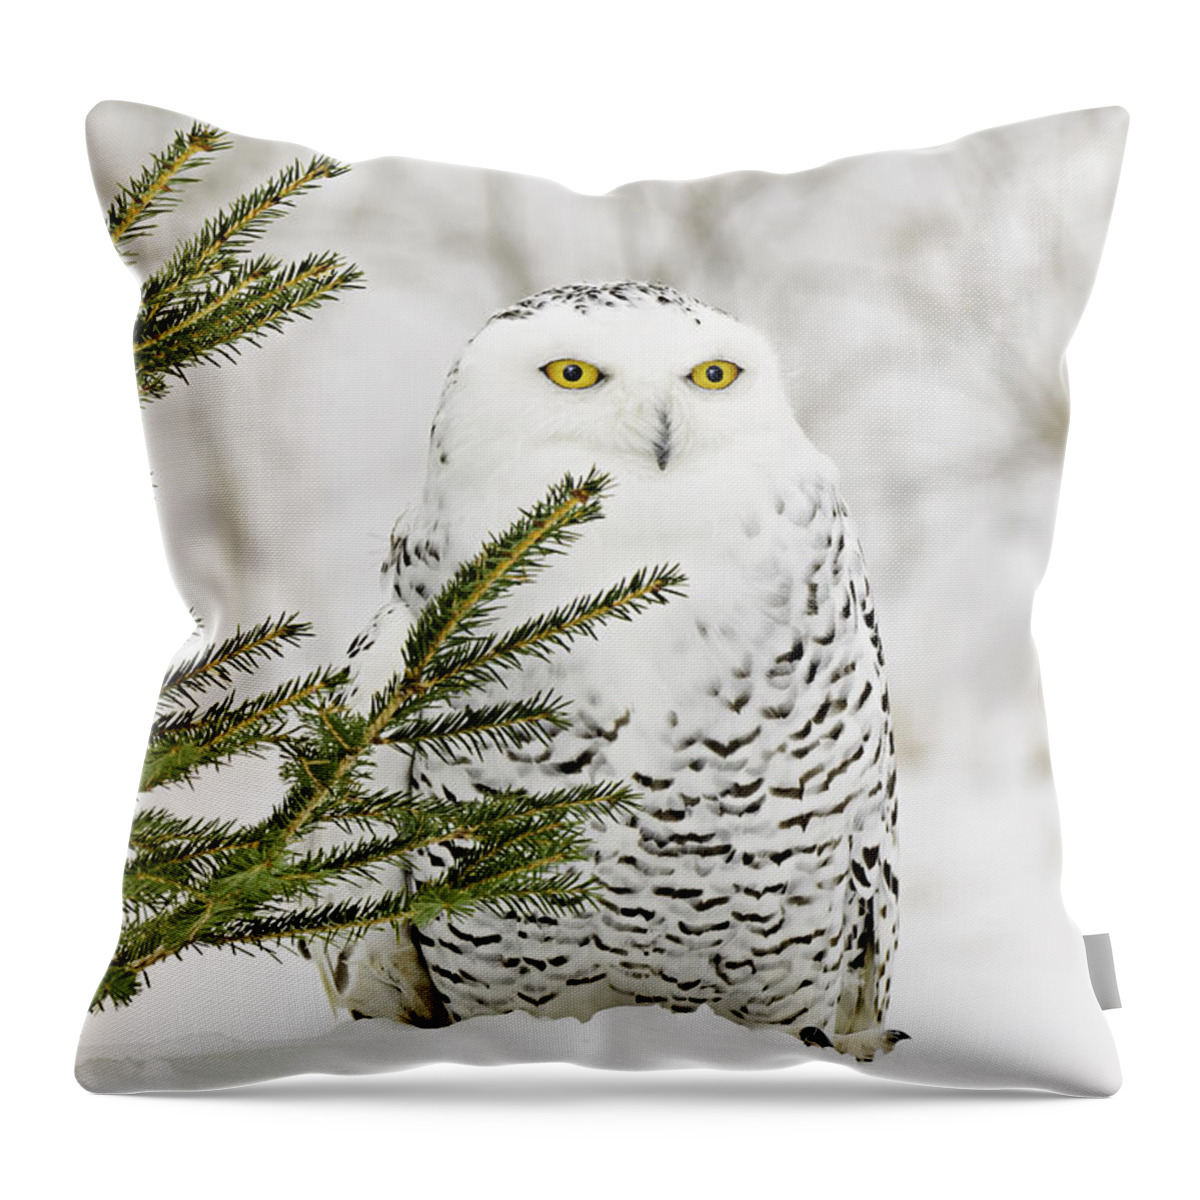 Snowy Owl Throw Pillow featuring the photograph Snowy Owl in the Snow by LeeAnn McLaneGoetz McLaneGoetzStudioLLCcom